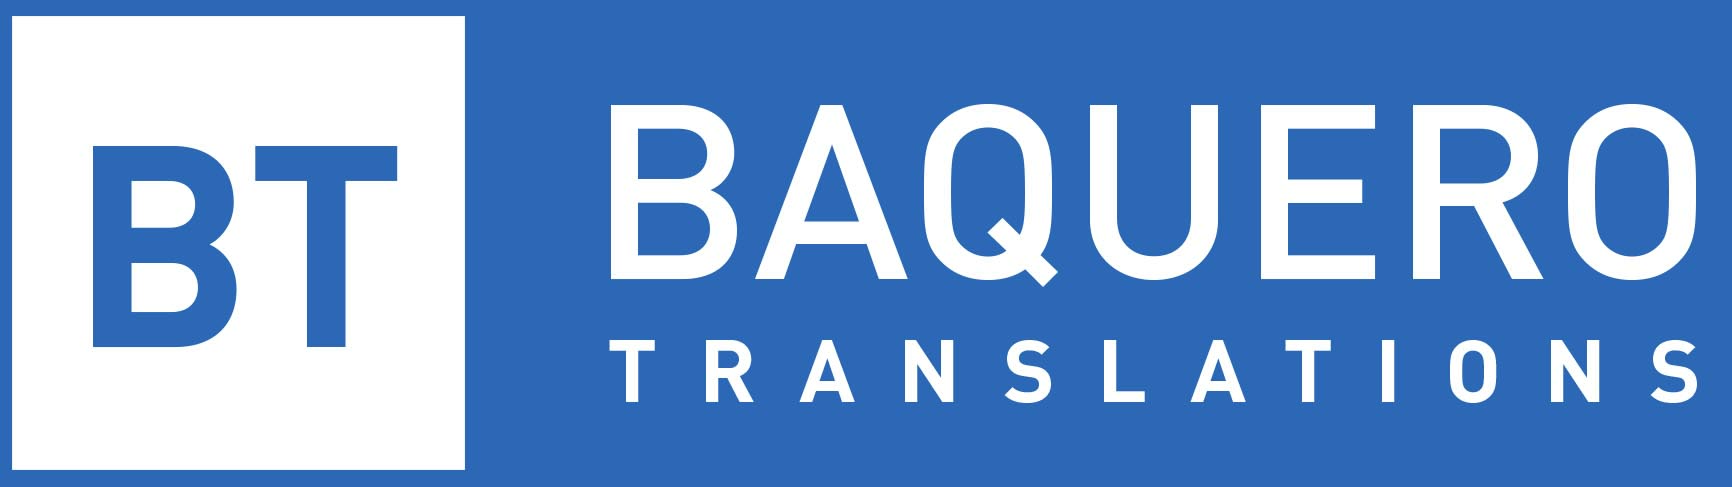 Baquero Translations